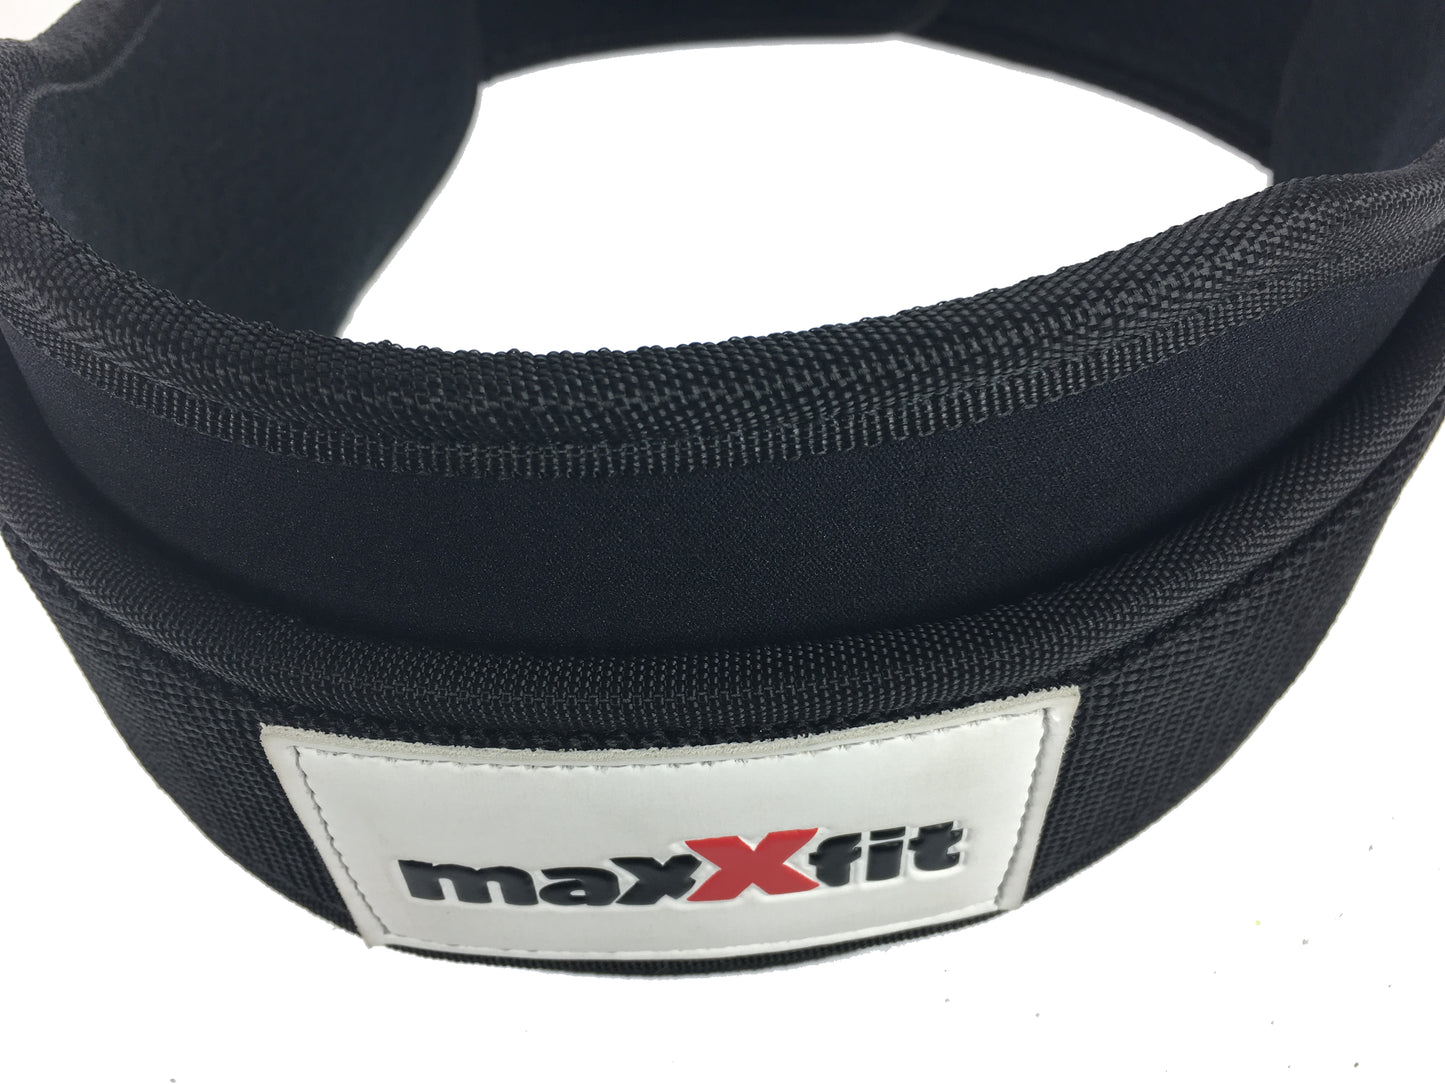 Maxxfit Neoprene Weight Lifting Belt Gym Training Back Support